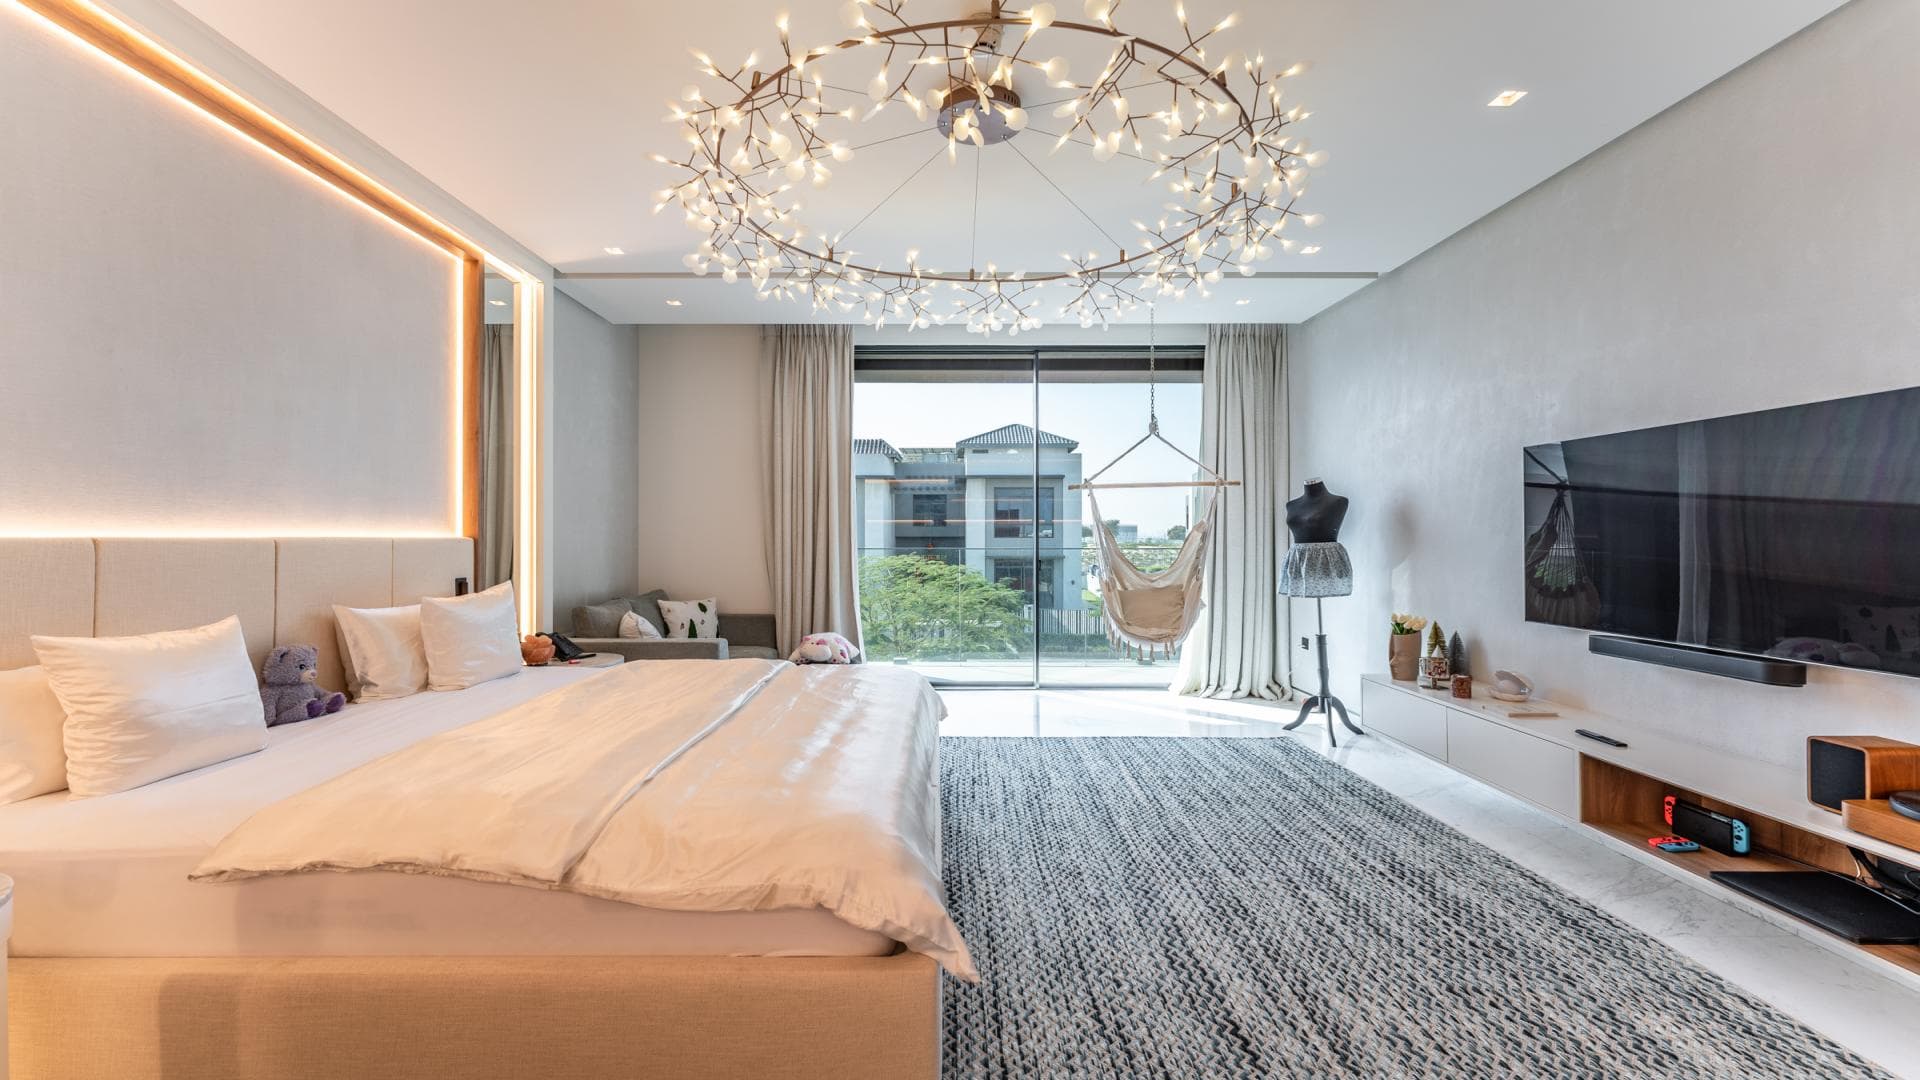 5 Bedroom Villa For Sale Dubai Hills Lp17449 1abfae838e235a00.jpg